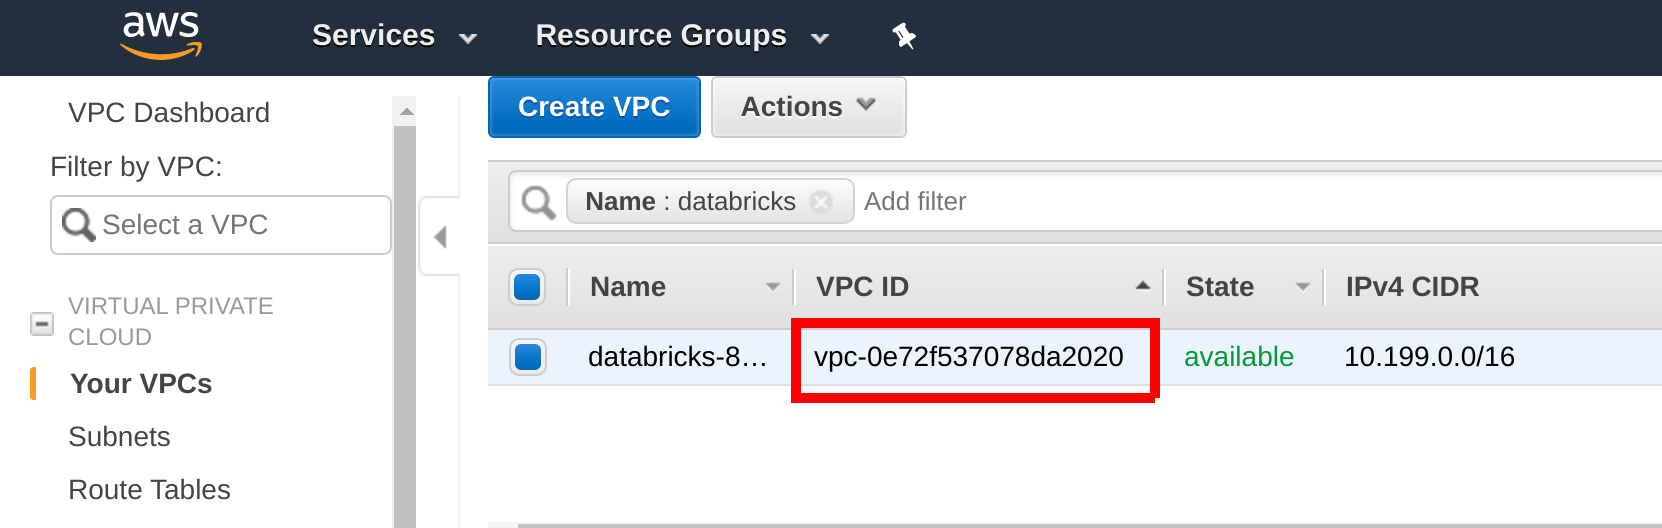 Identify the Databricks VPC